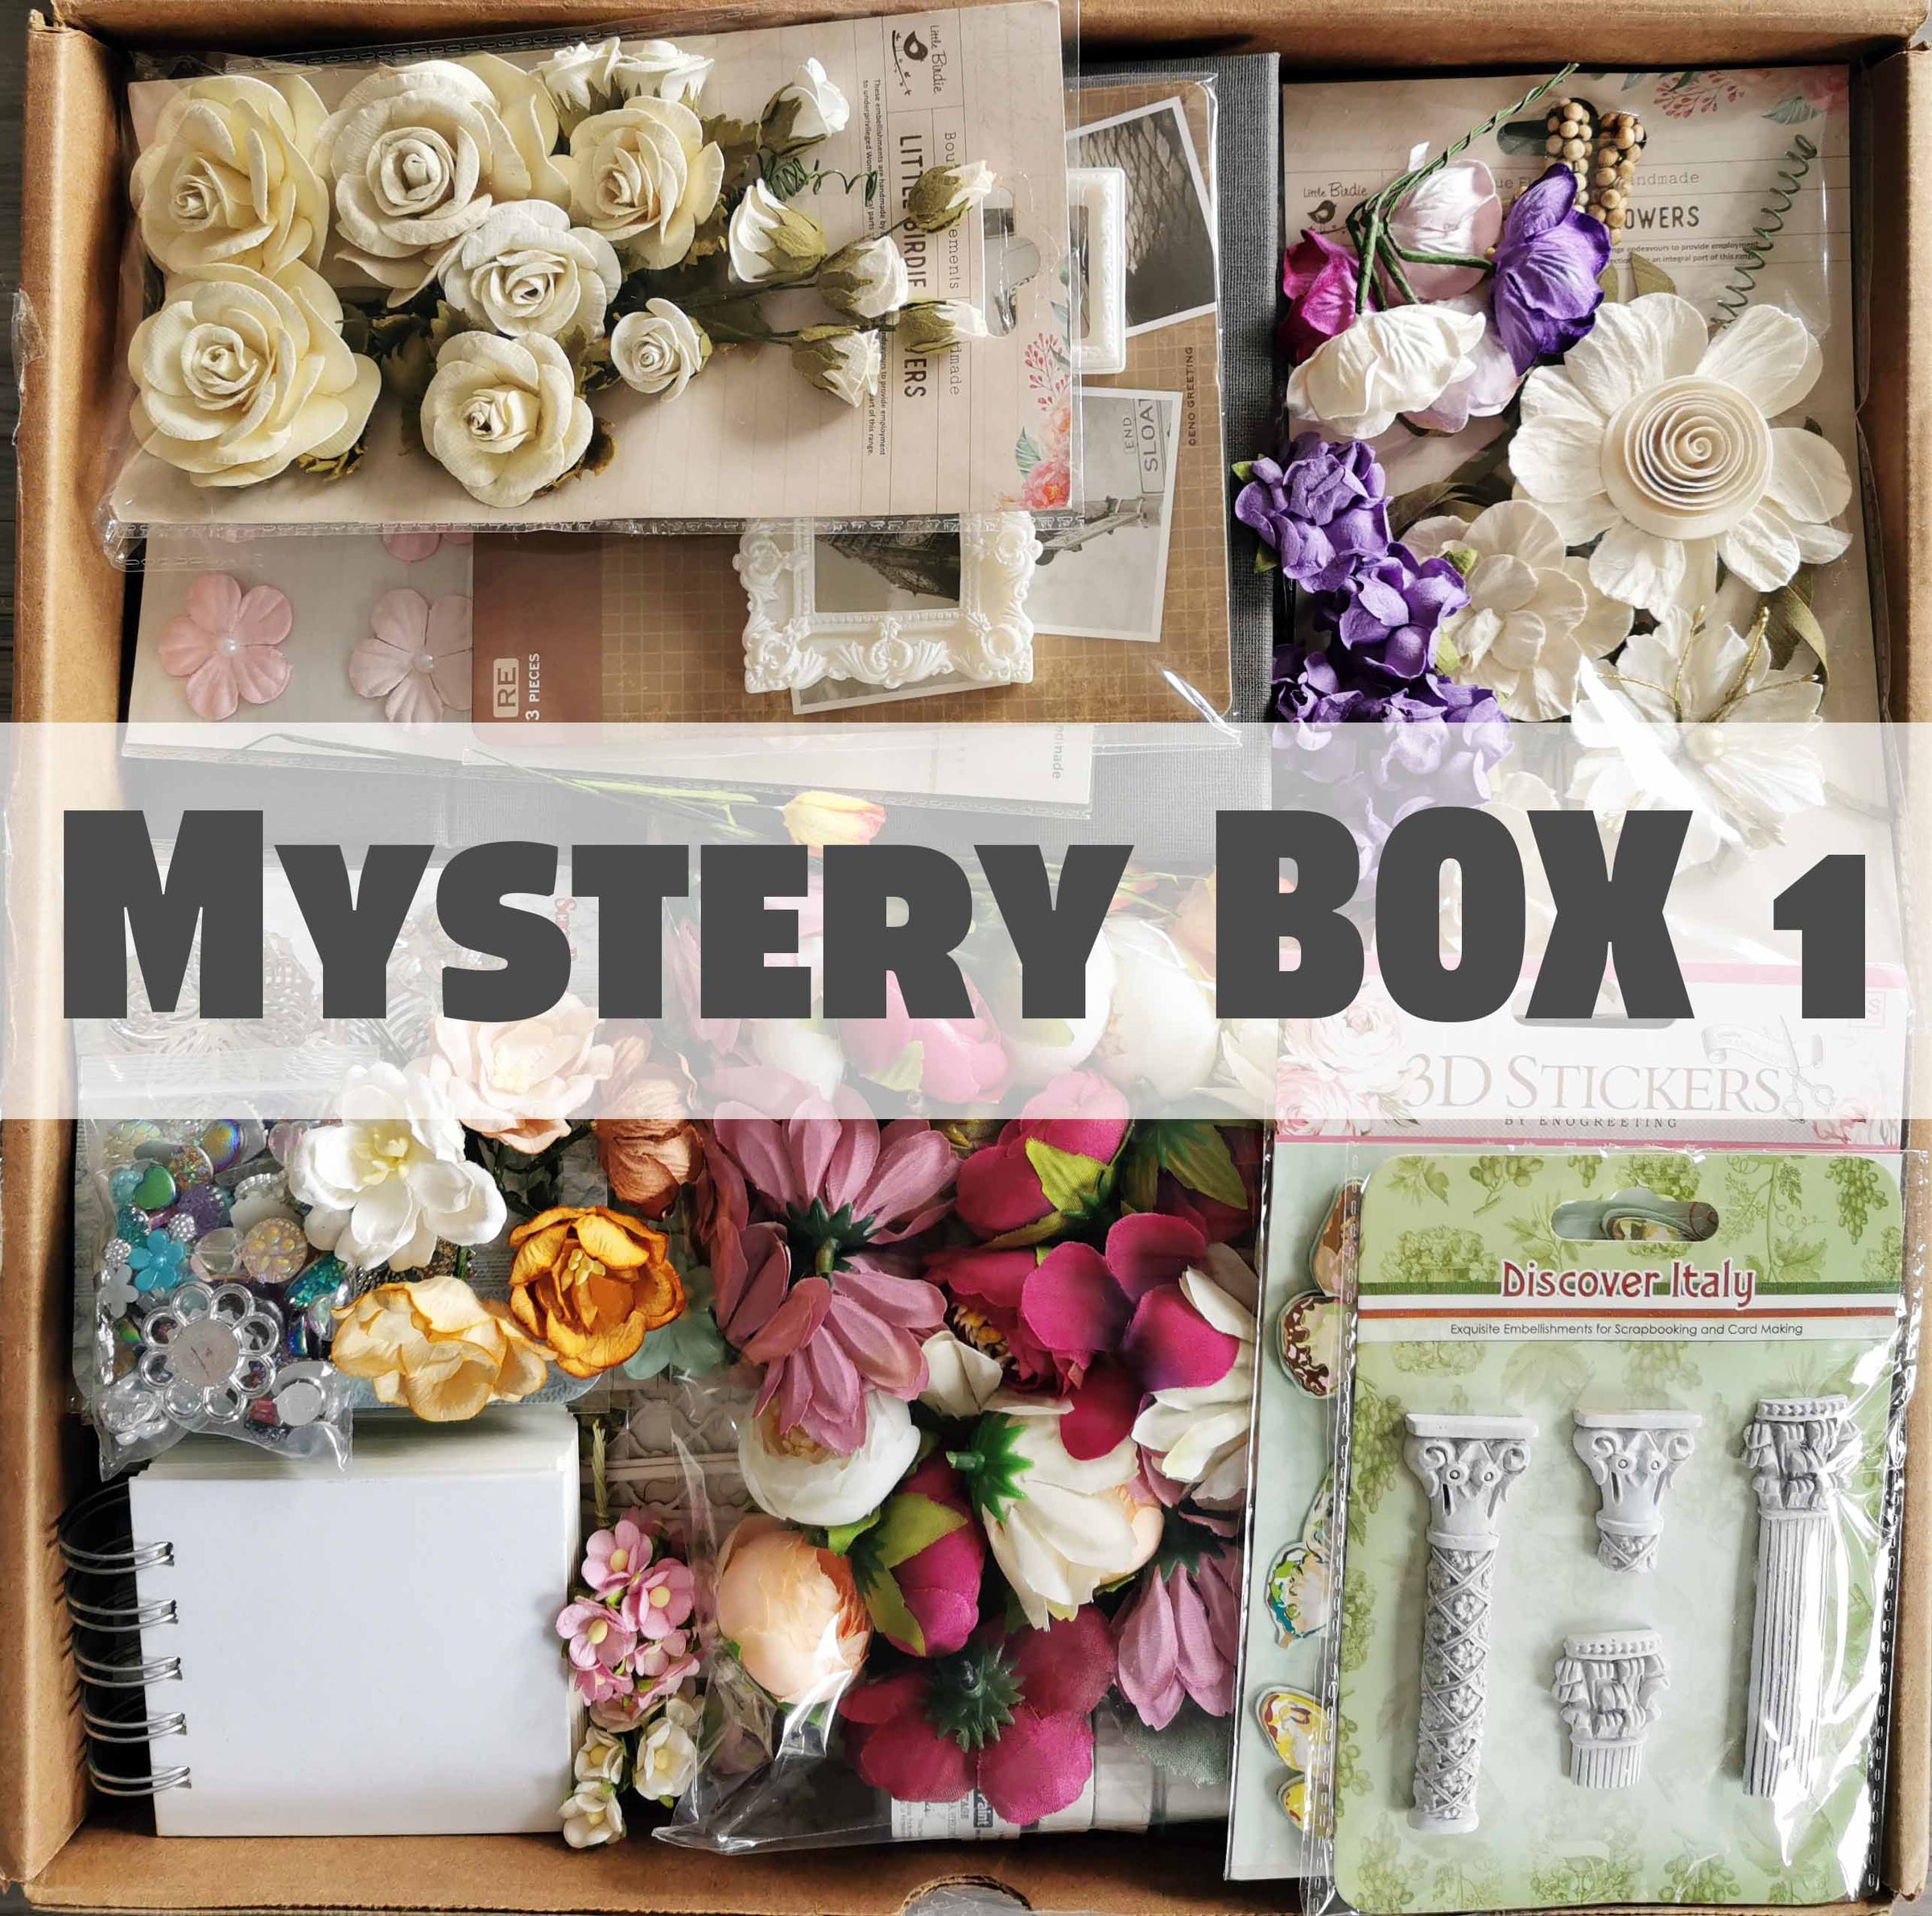 The Mystery Art Supplies Box